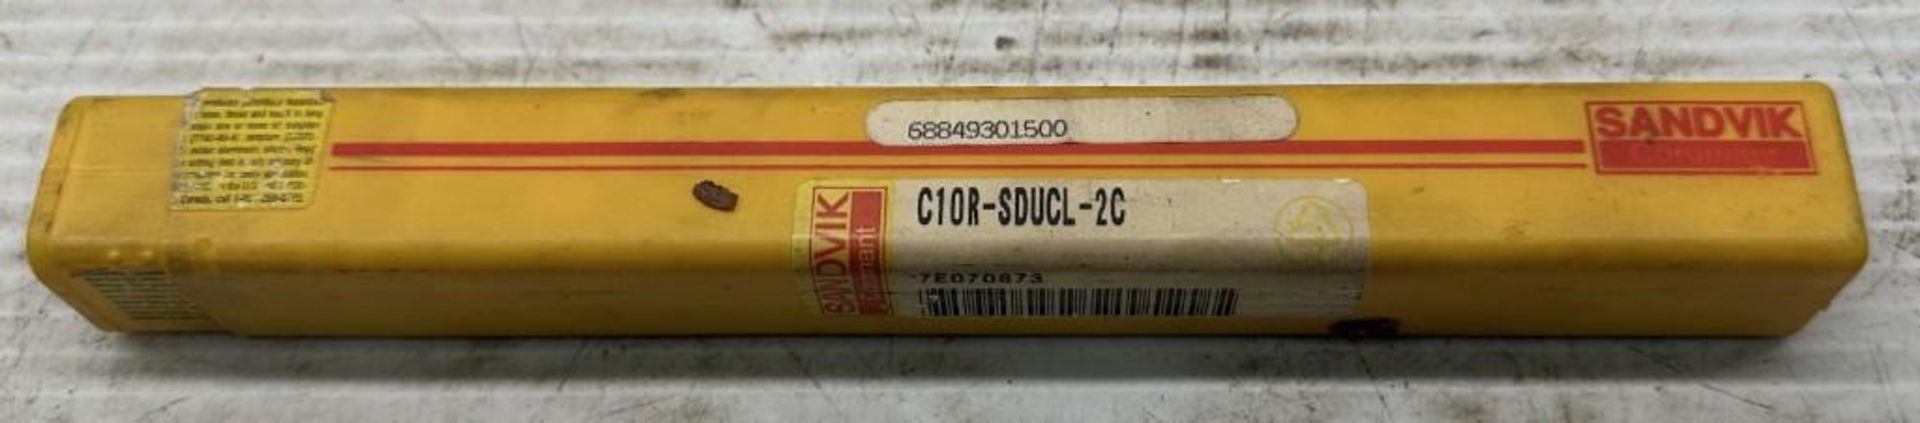 Sandvik #C10R-SDUCL-2C Carbide Grooving Boring Bar